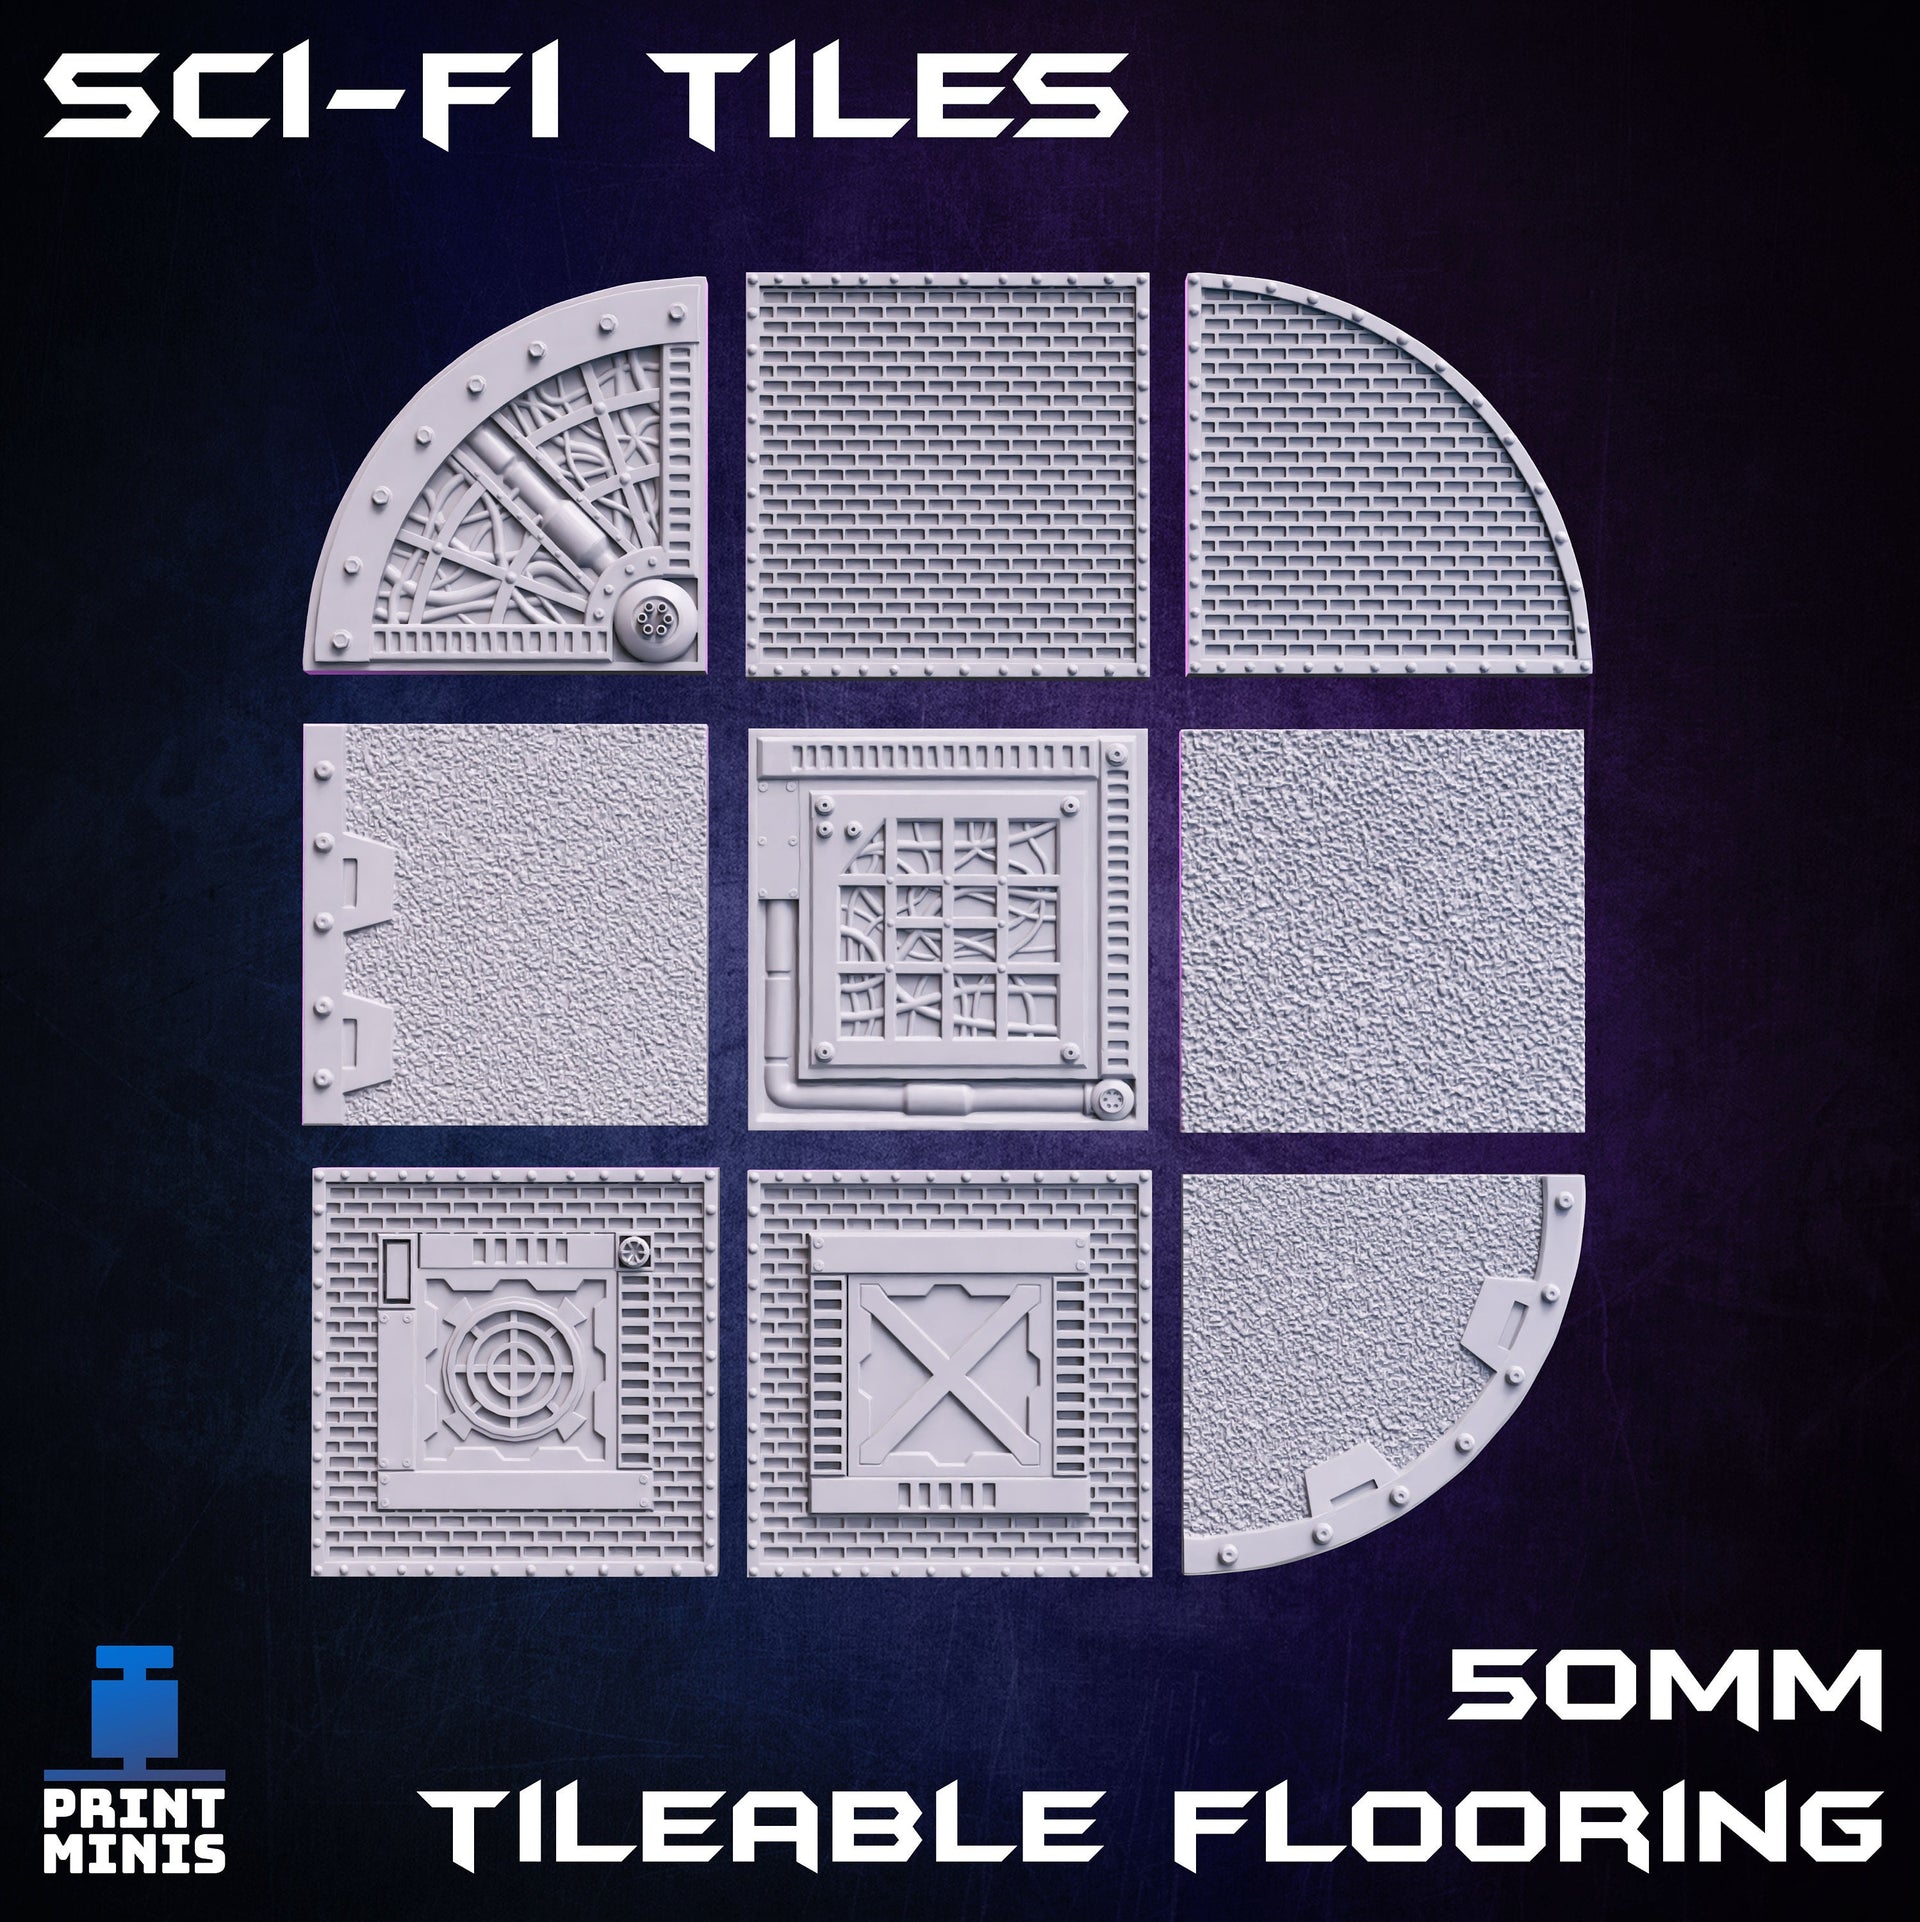 Sci-Fi Tiles, 50mm tilable flooring - Print Minis 